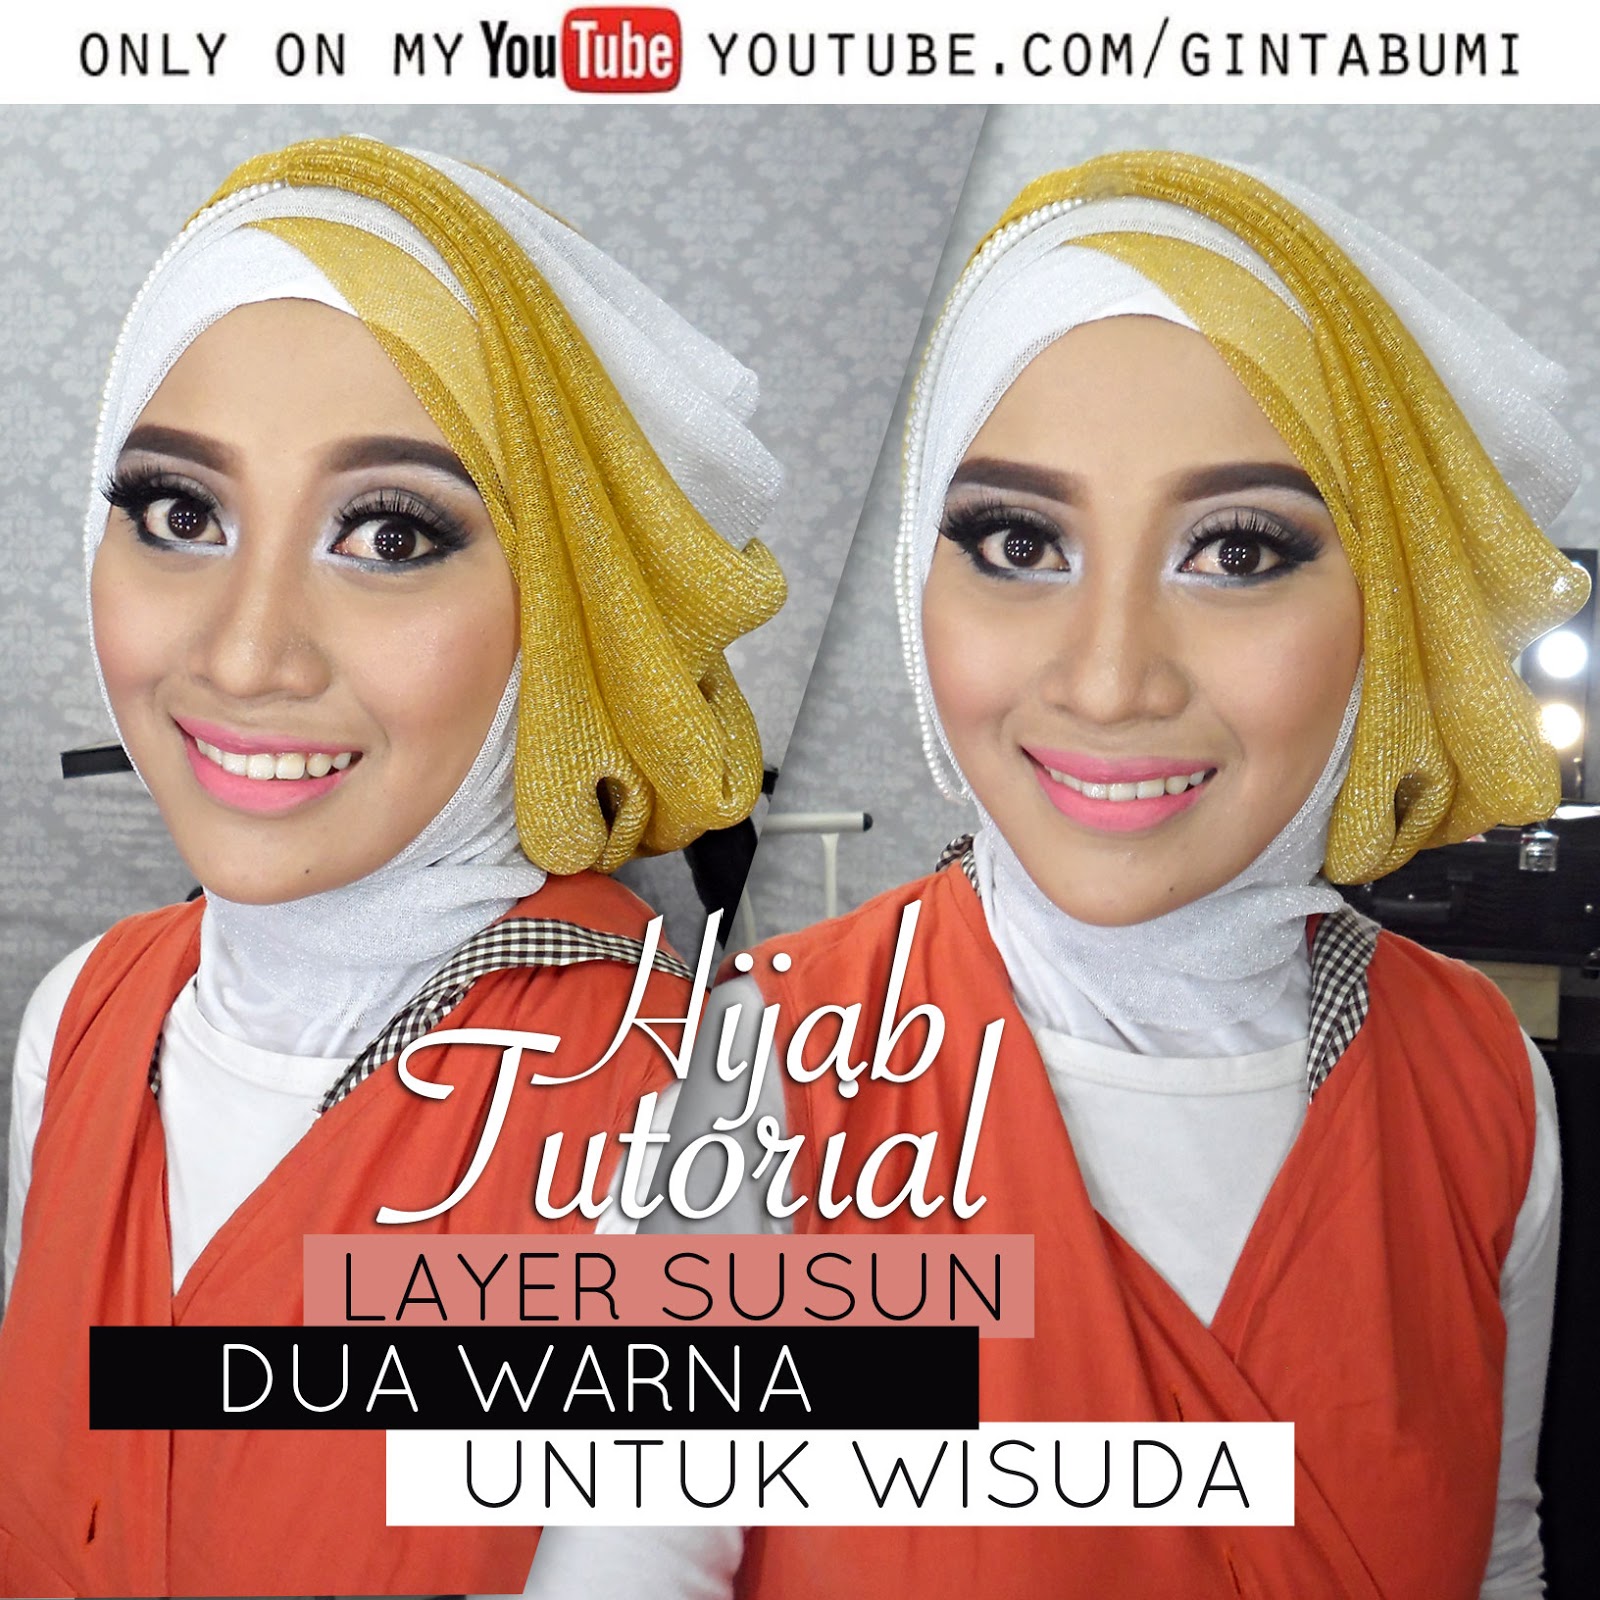 15 Wisuda Fasihon Tutorial Hijab Di Ig Tutorial Hijab Terbaru